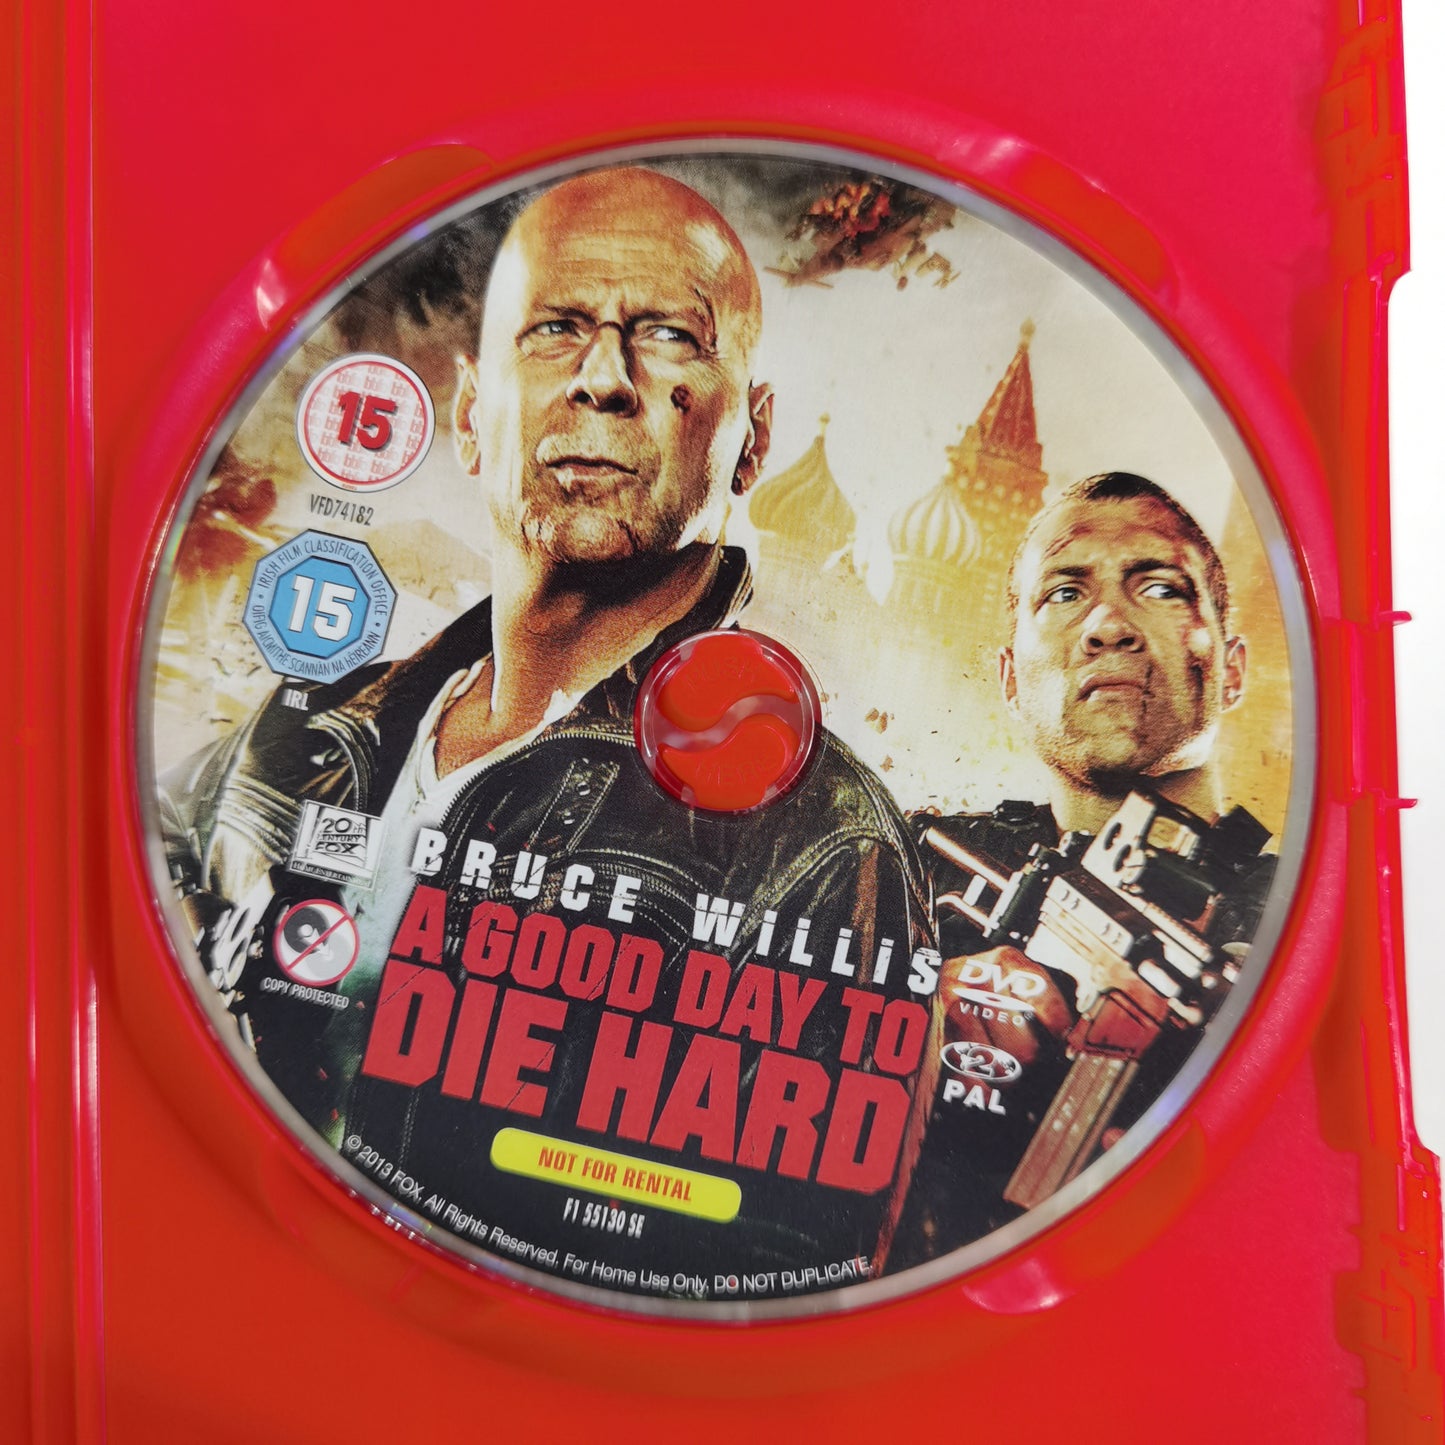 Die Hard: A Good Day to Die Hard (2013) - DVD UK 2013